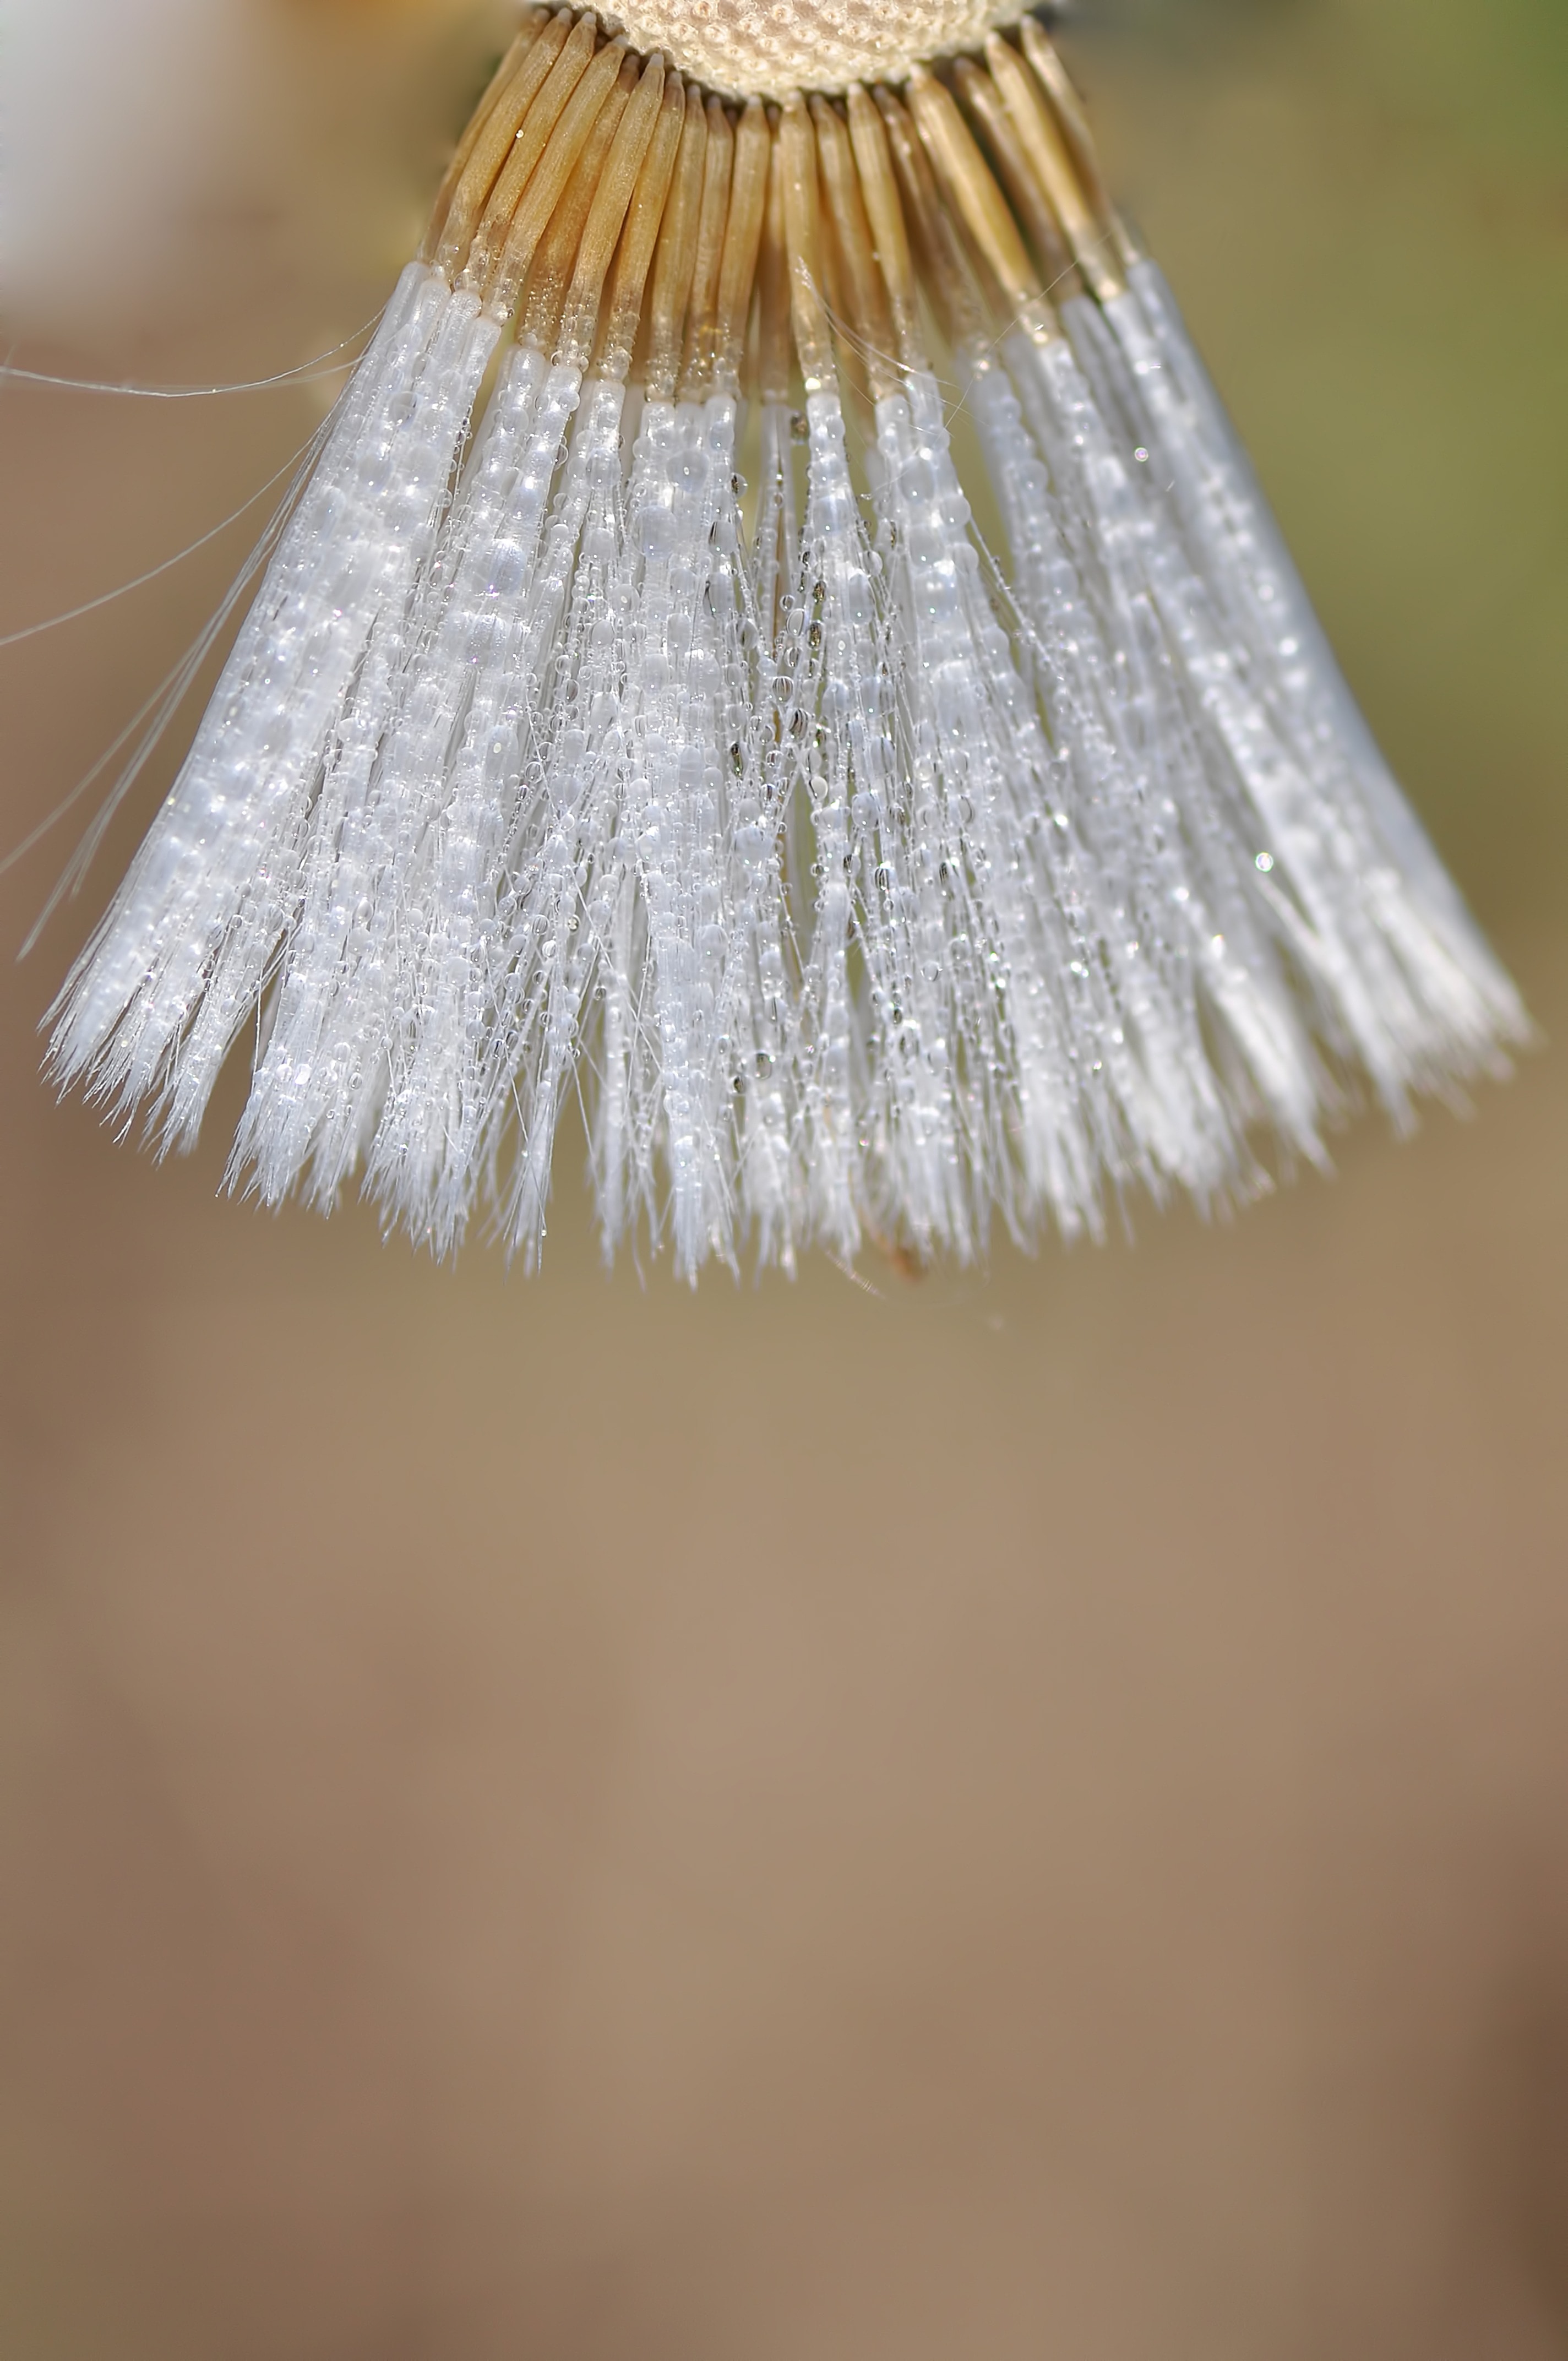 microscopic photography of white dandelion